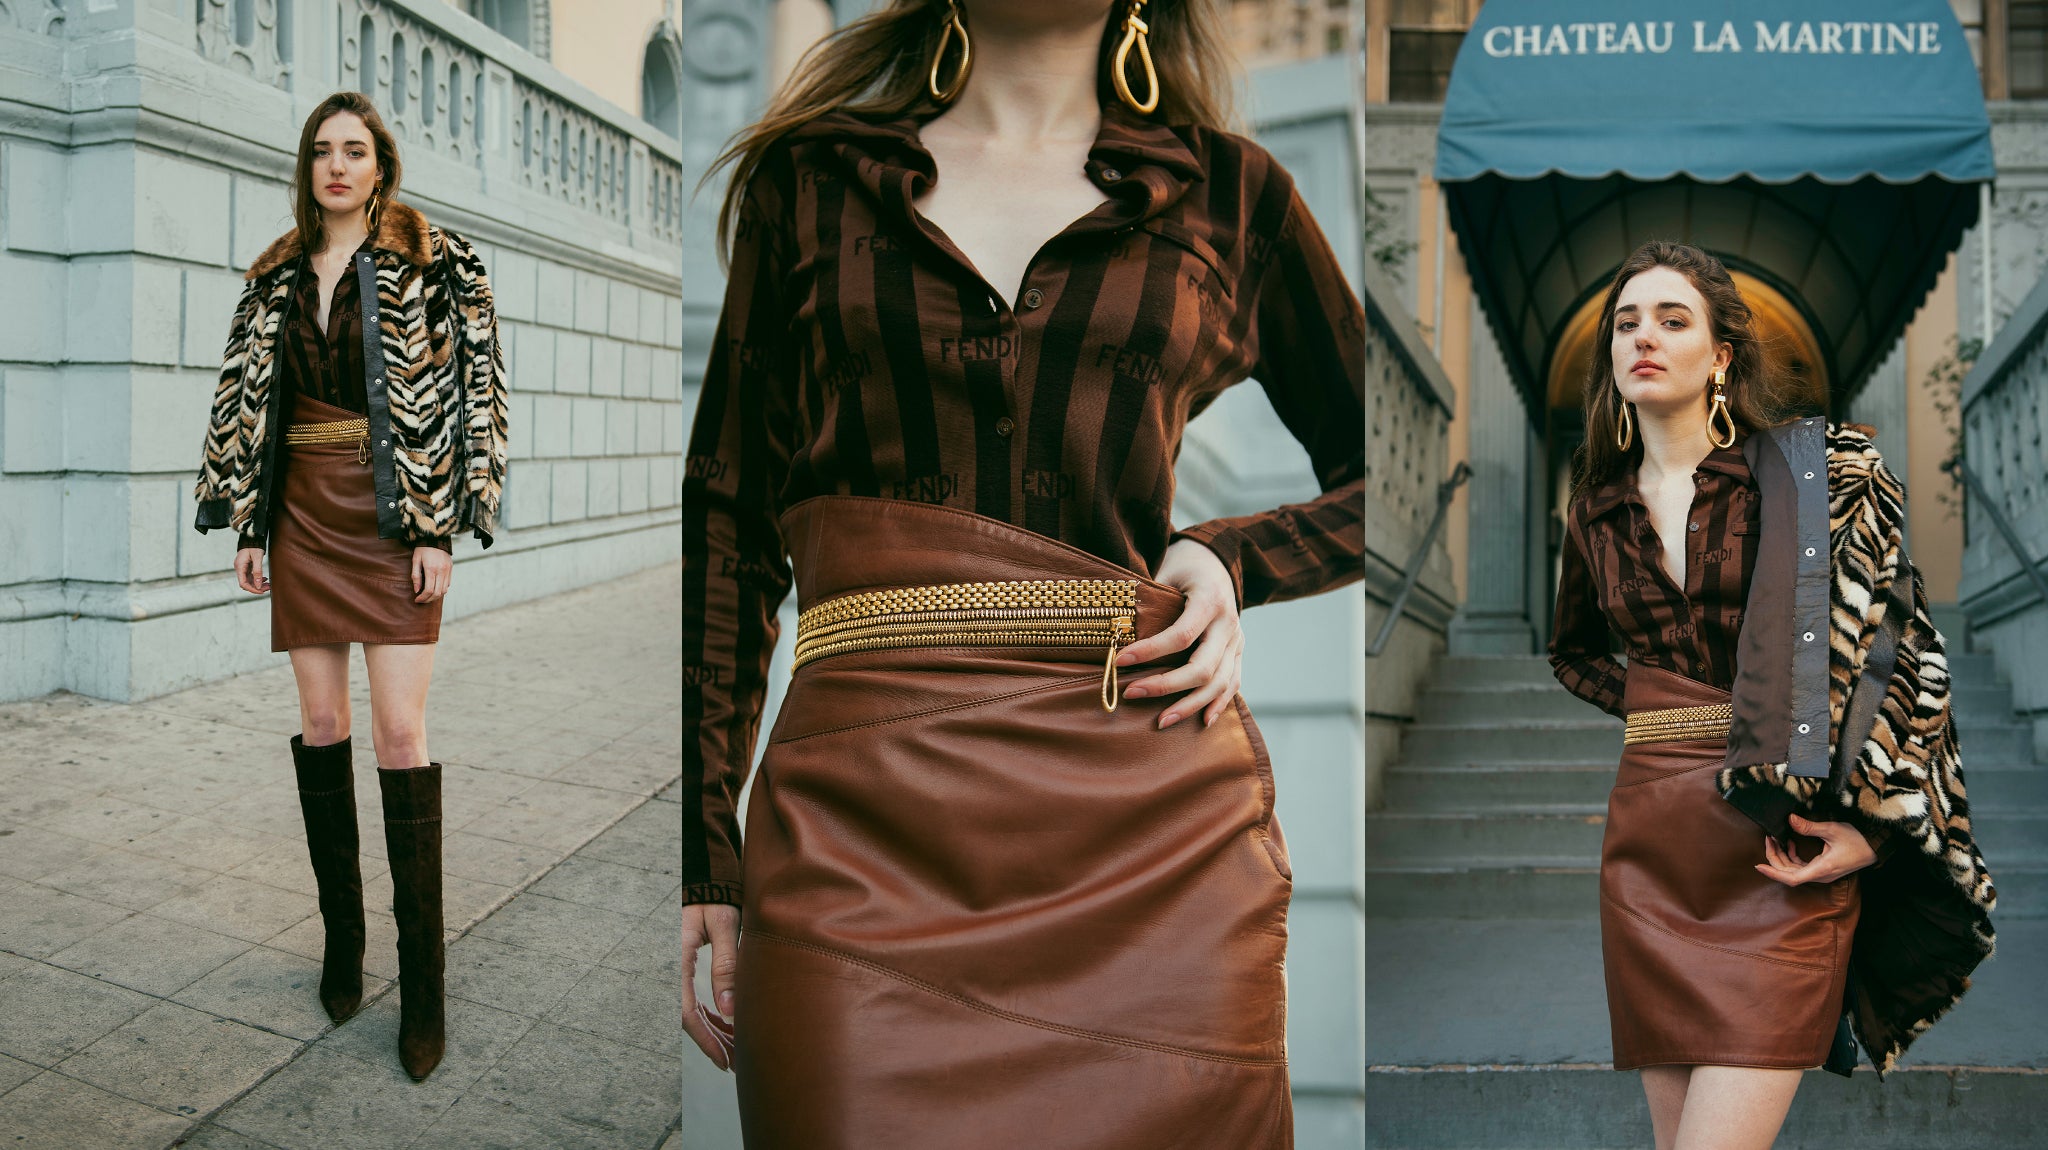 Recess Vintage Girl in Mink Chevron Jacket, leather skirt, & fendi top posing in front of building